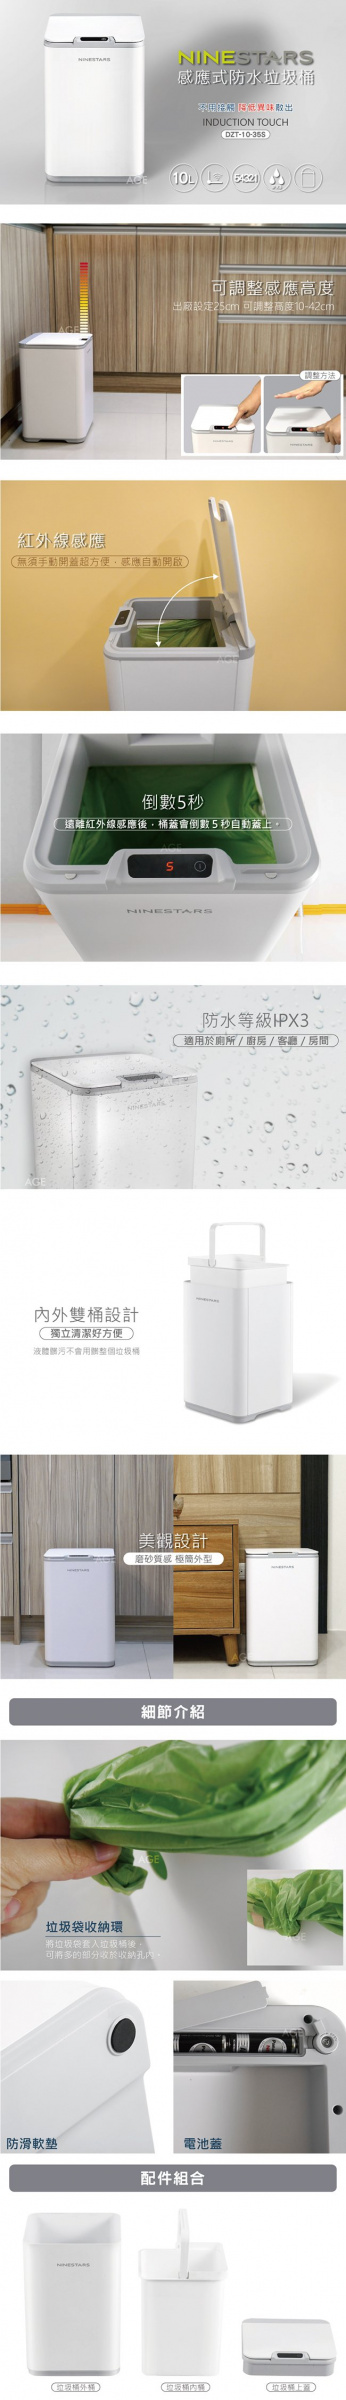 NINESTARS防水感應垃圾桶(倒數關蓋/含內筒) DZT-10-35S